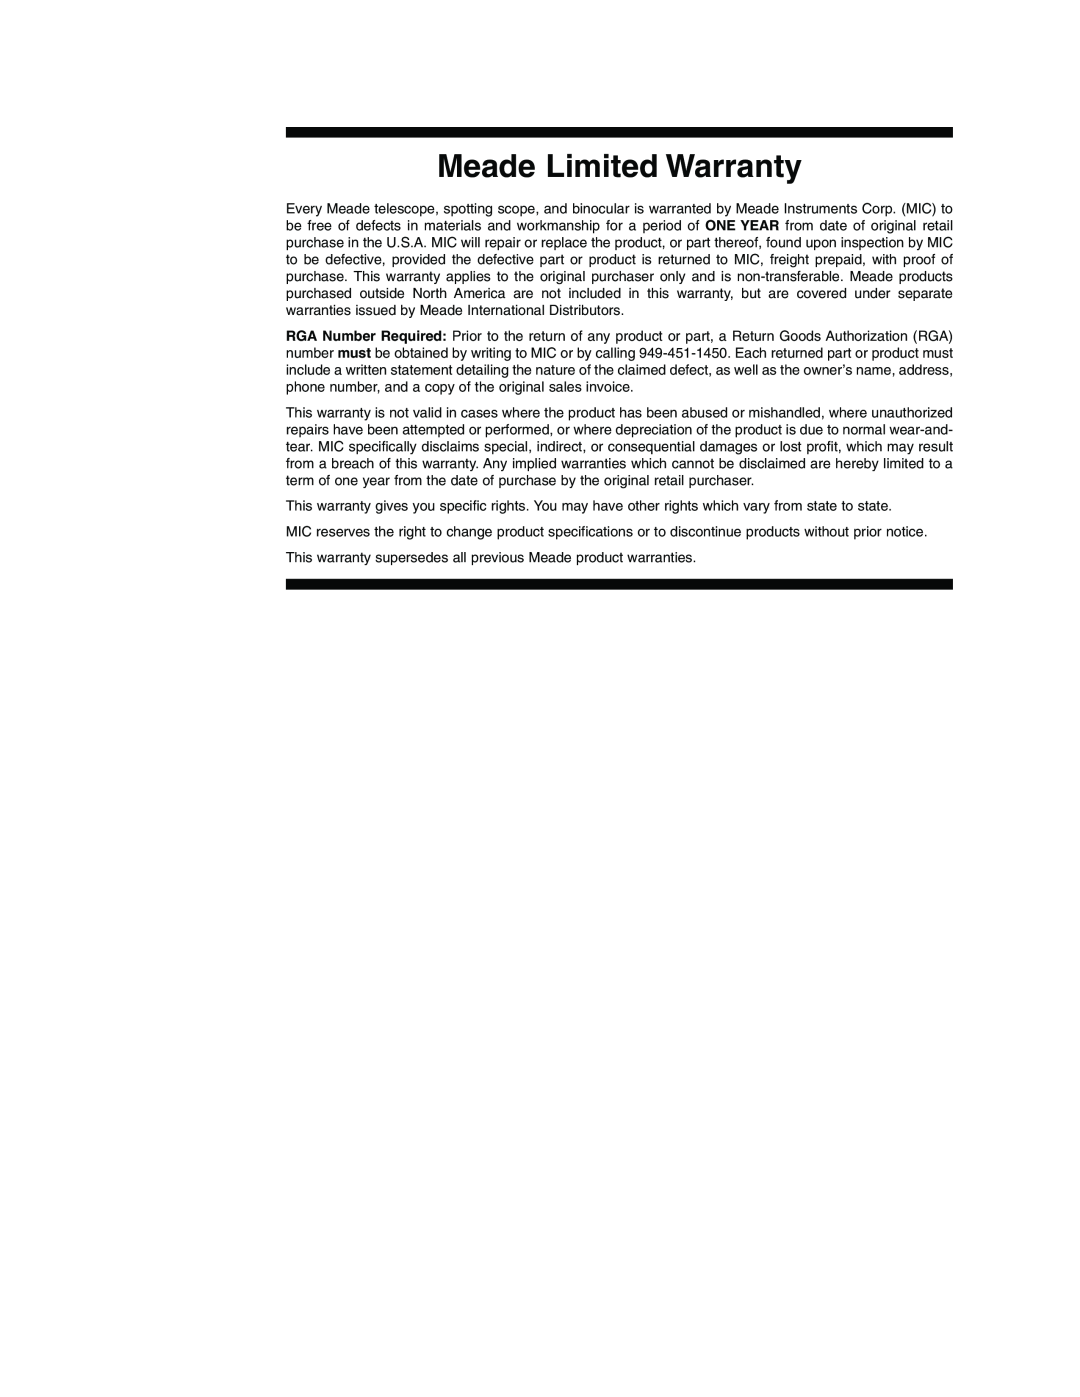 Meade 4504 instruction manual Meade Limited Warranty 